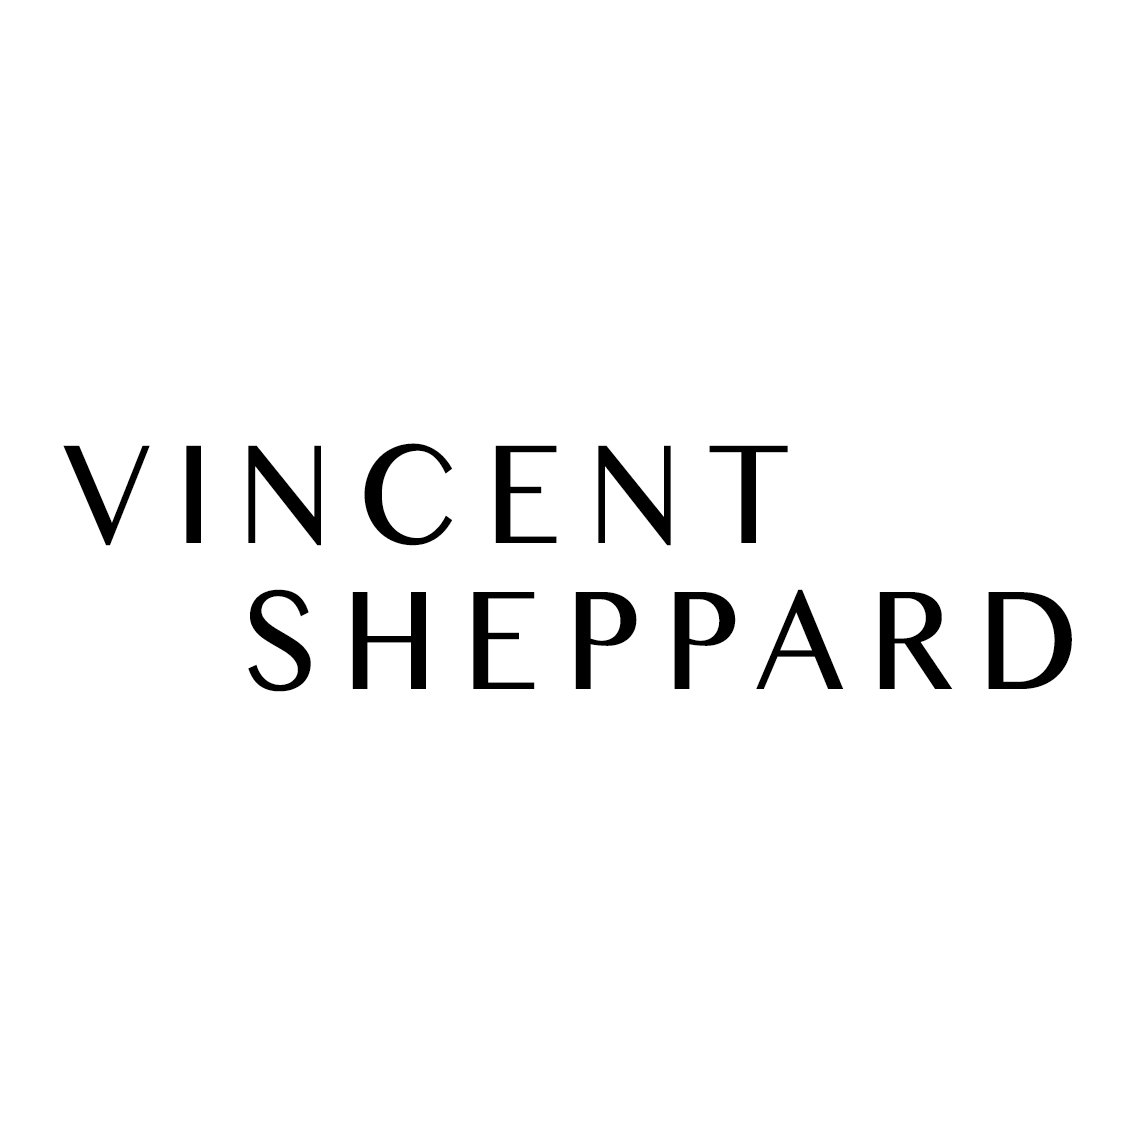 vincent-sheppard-logo-jpg.jpg